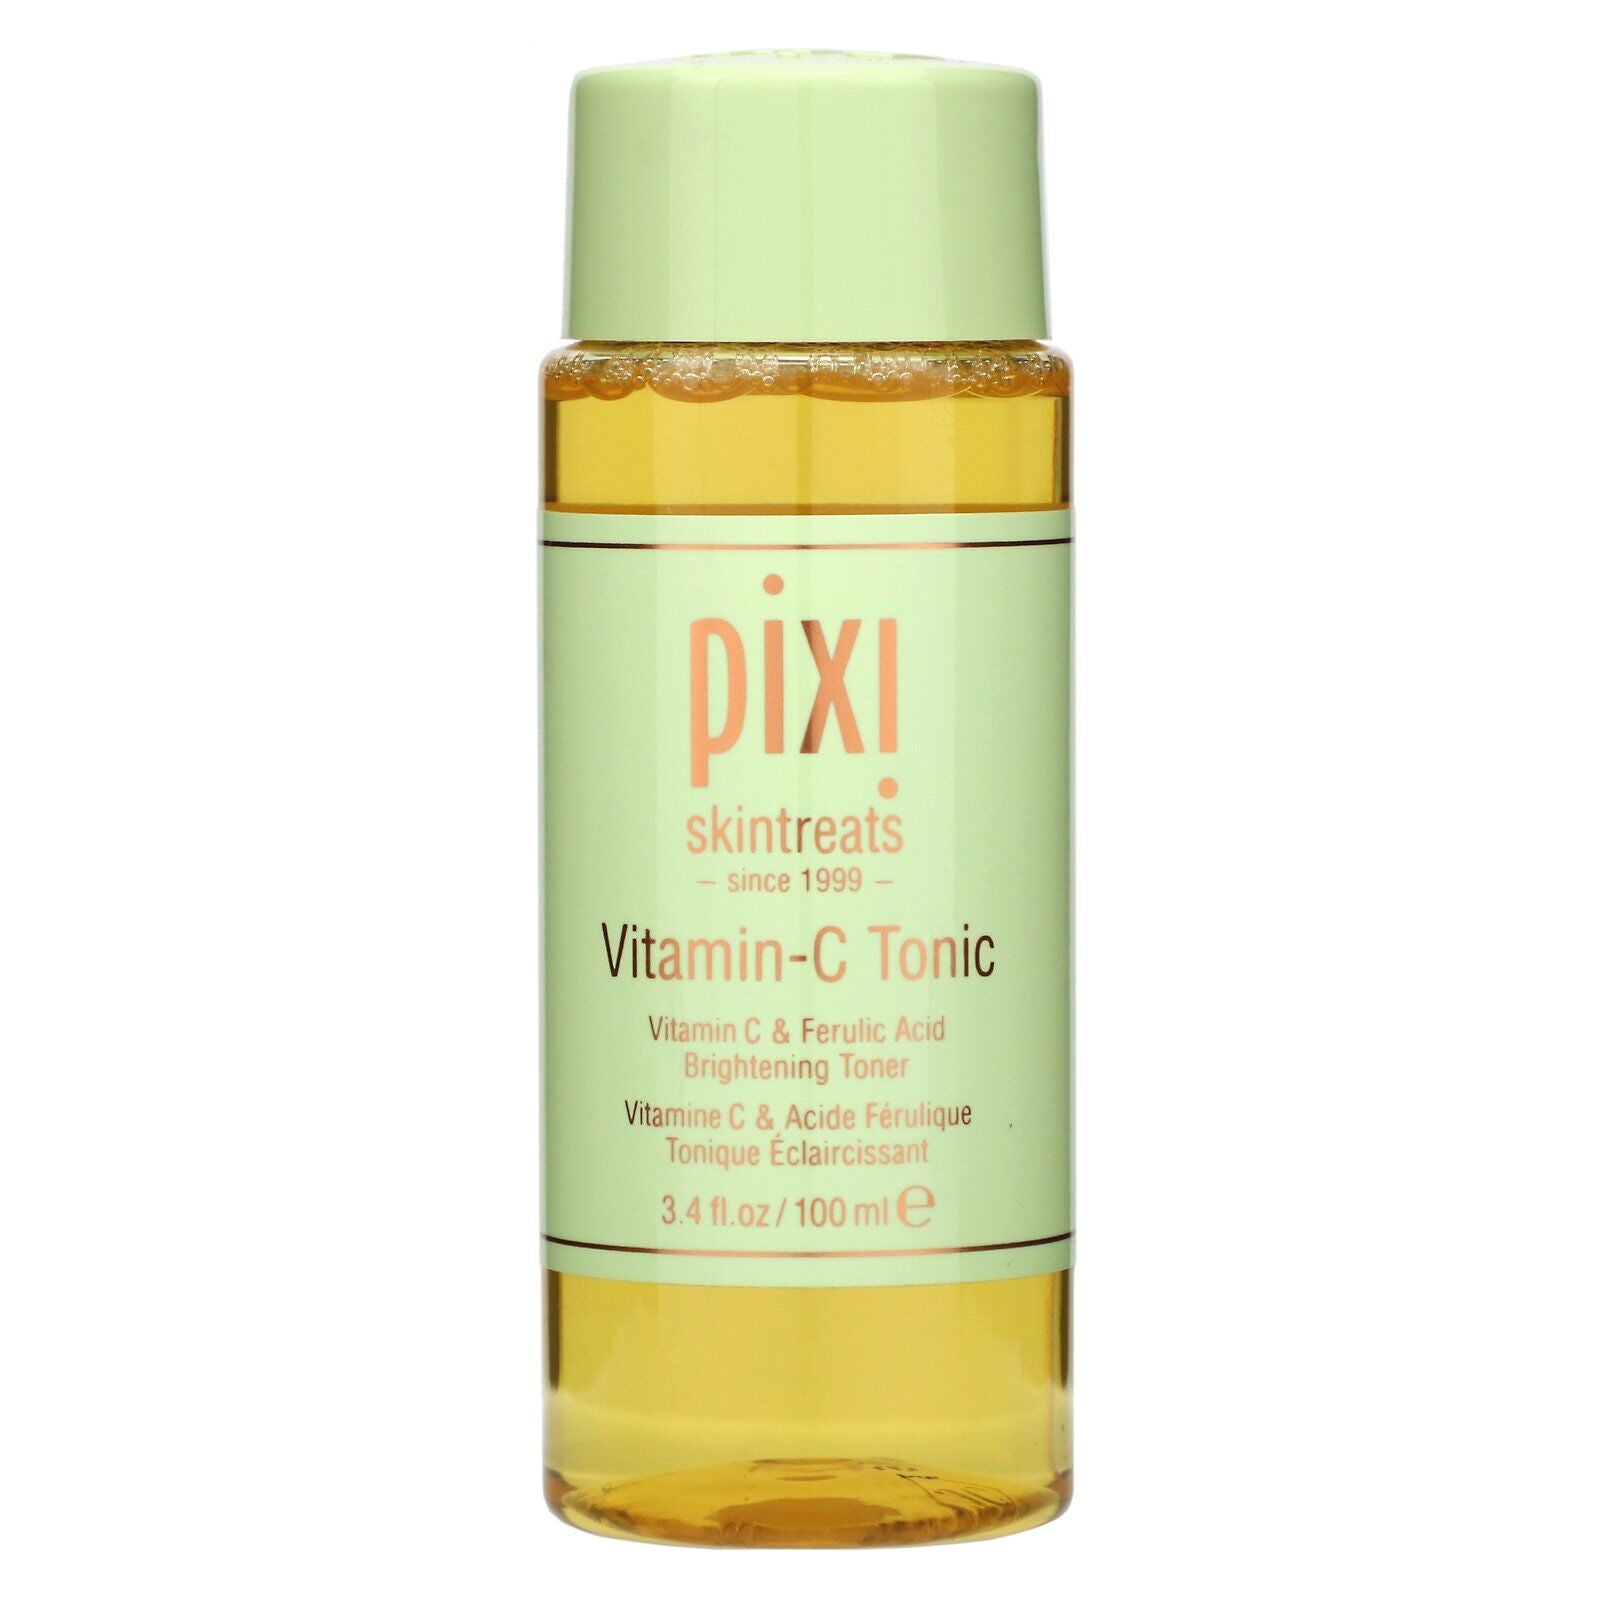 Pixi – Vitamin-C, Tonic – 100ML